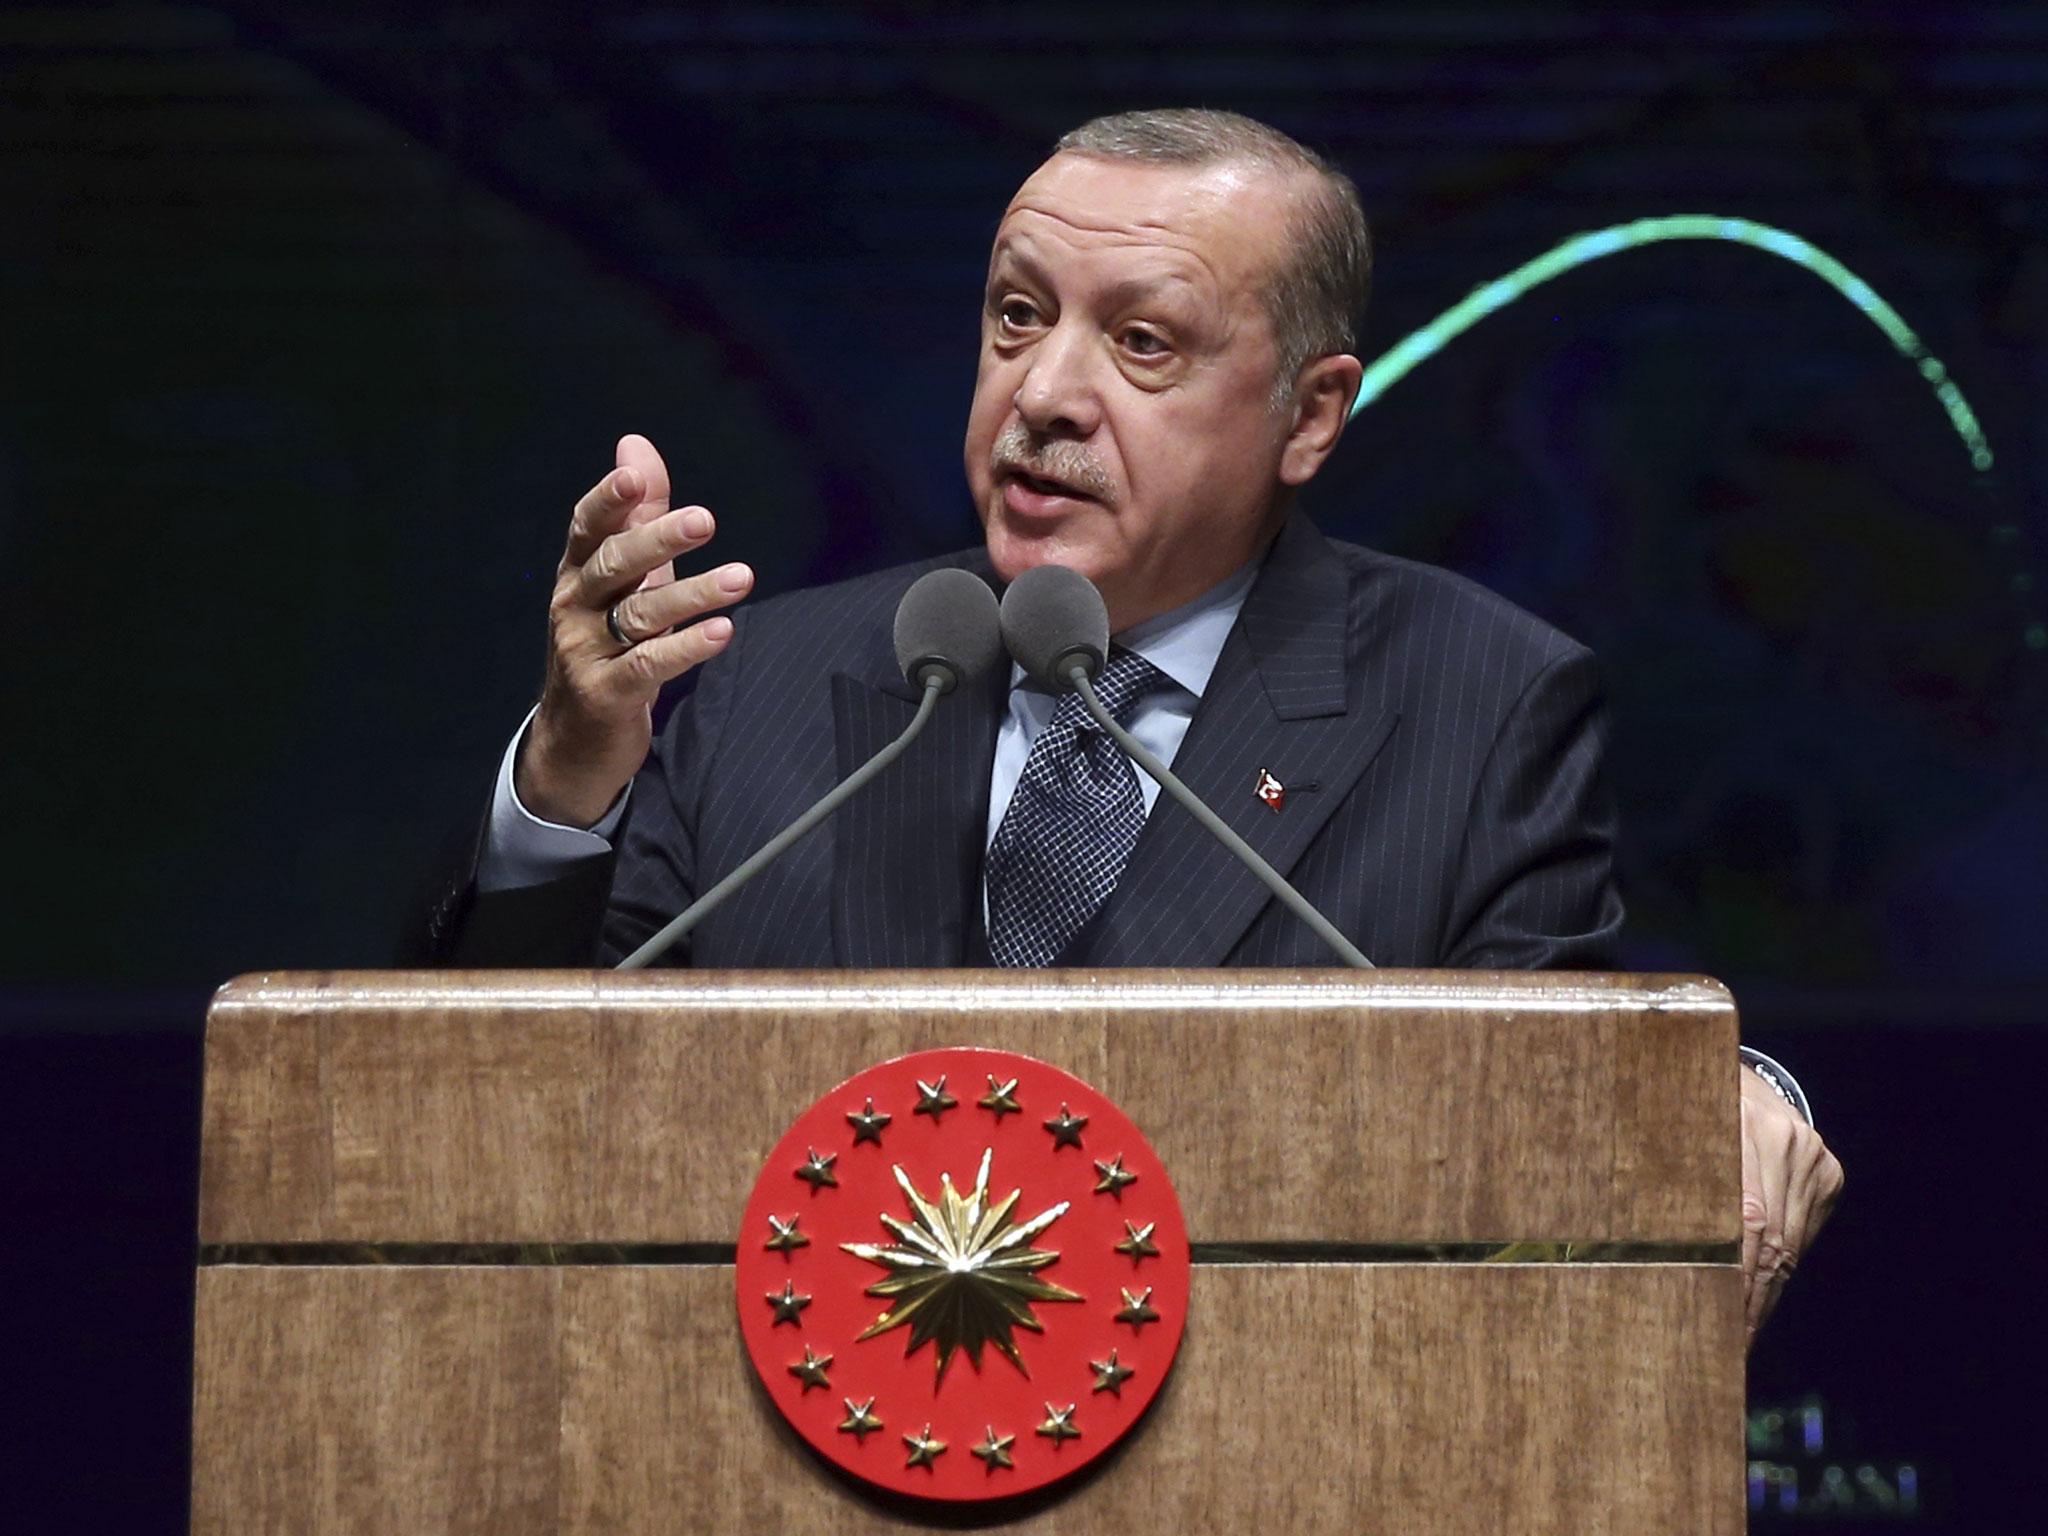 Erdogan has made Turkey's population registers public